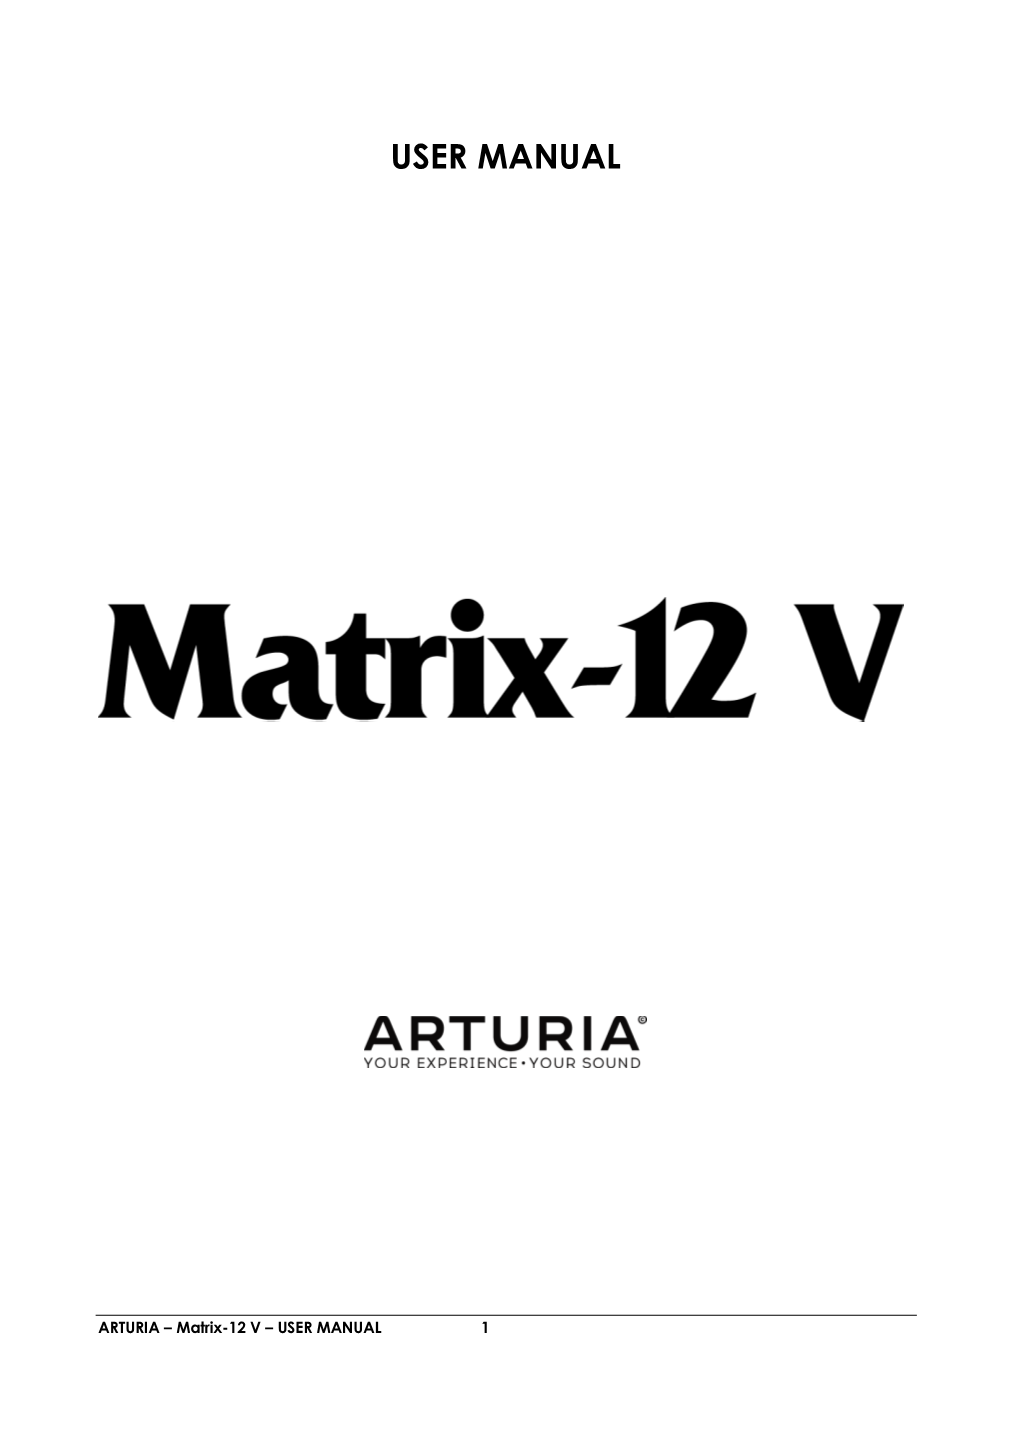 User Manual Matrix-12 V